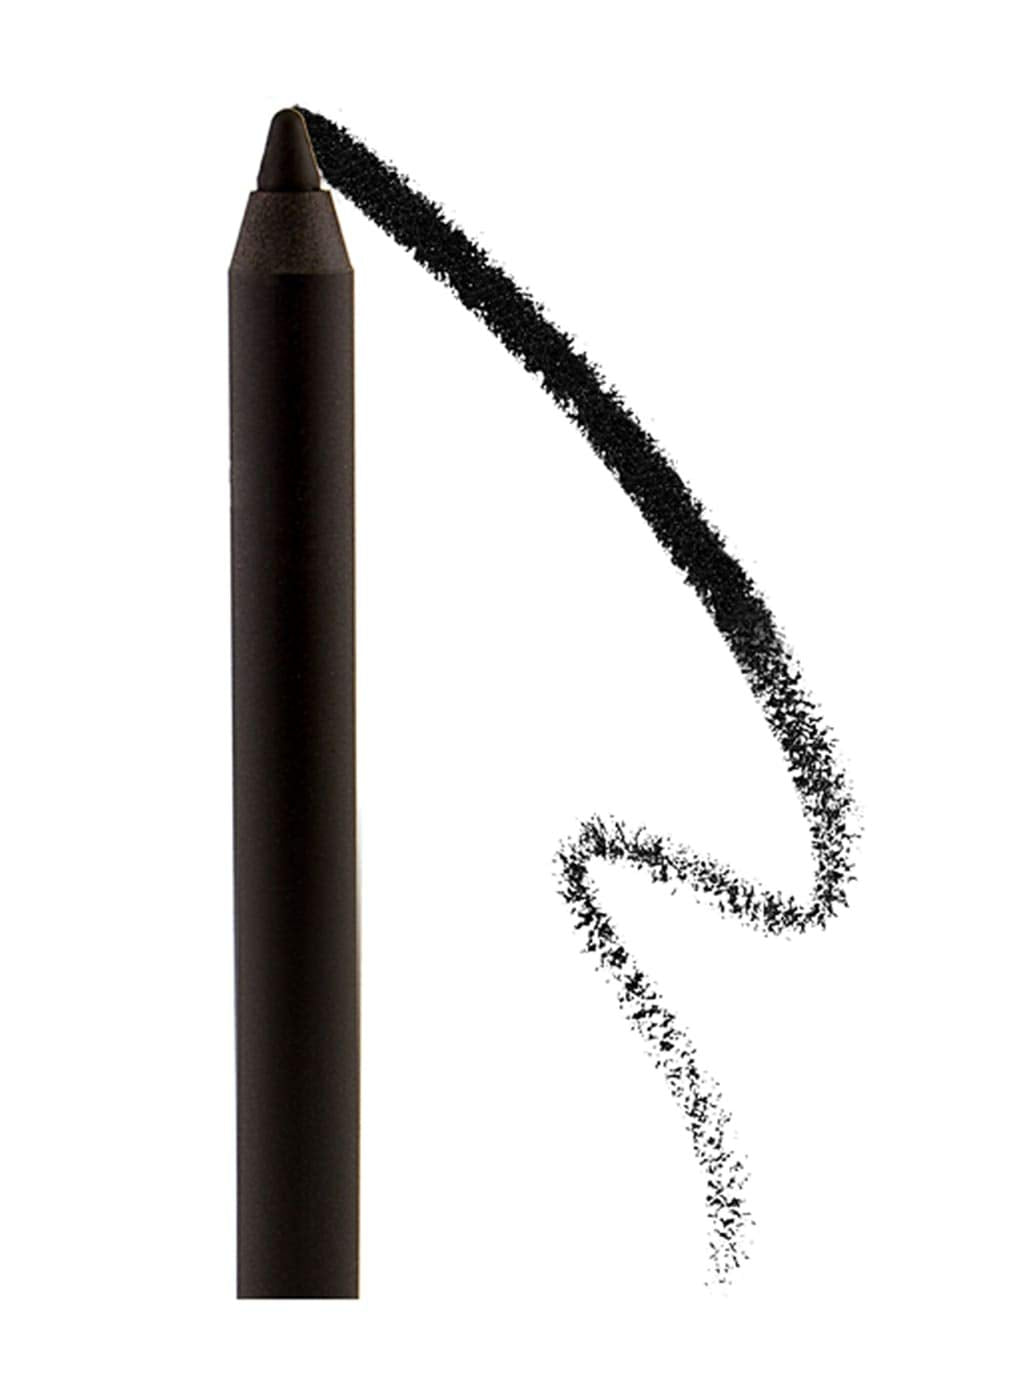 SUGAR Cosmetics Stroke of Genius Heavy-Duty Kohl Eyeliner Pencil - 01 Back to Black (Black), 1.2 g